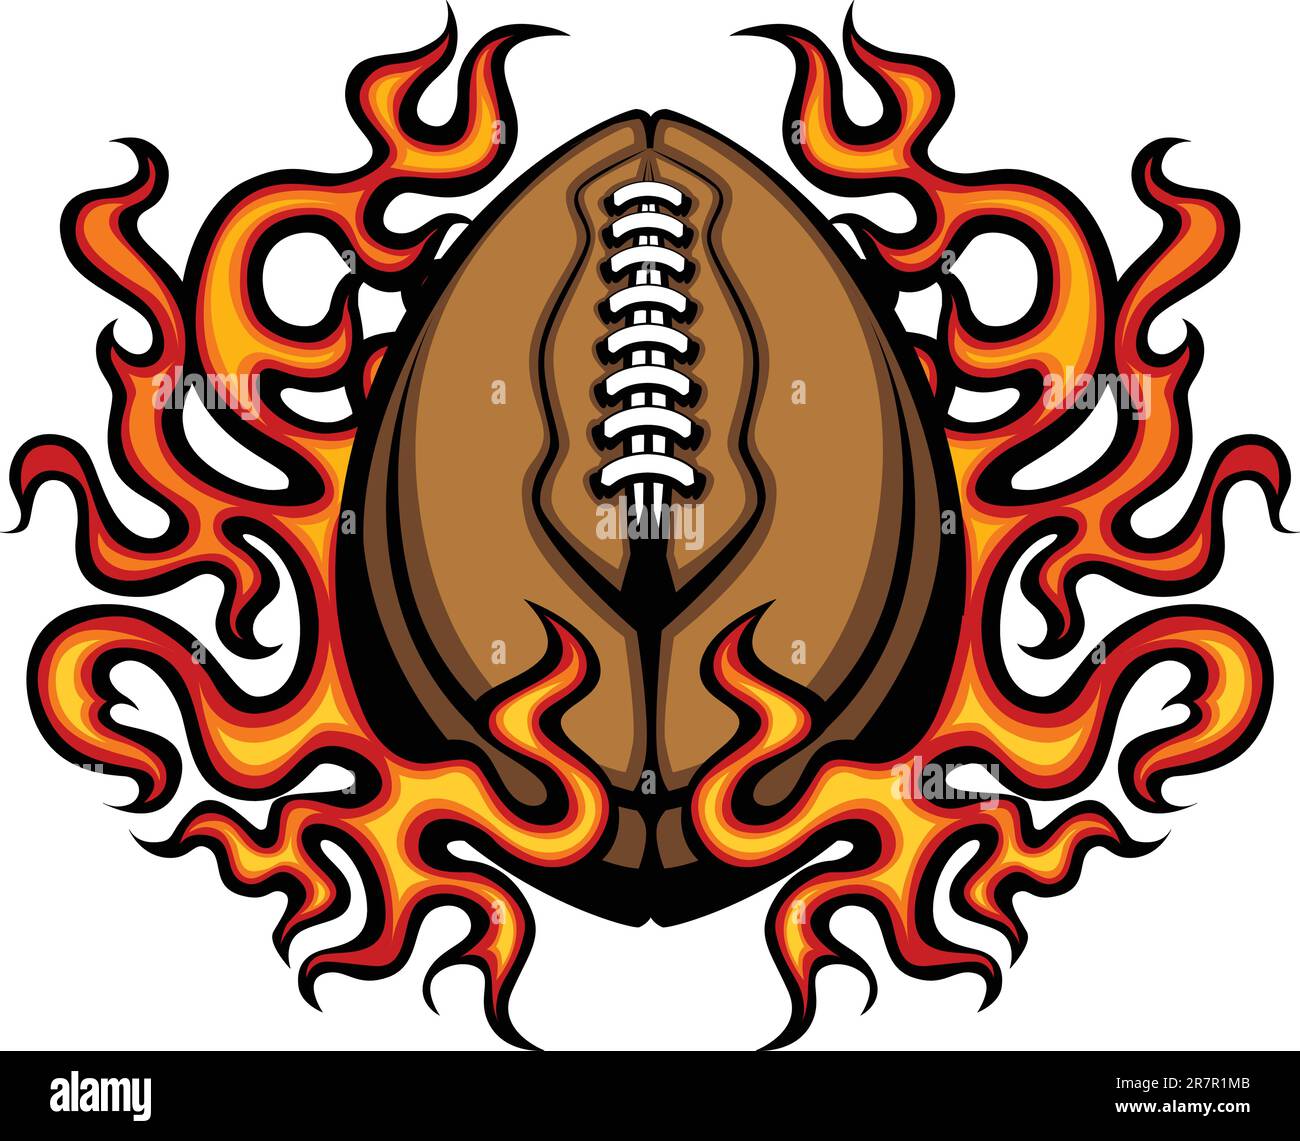 Grafik American Football Vektorbildvorlage mit Flammen Stock Vektor